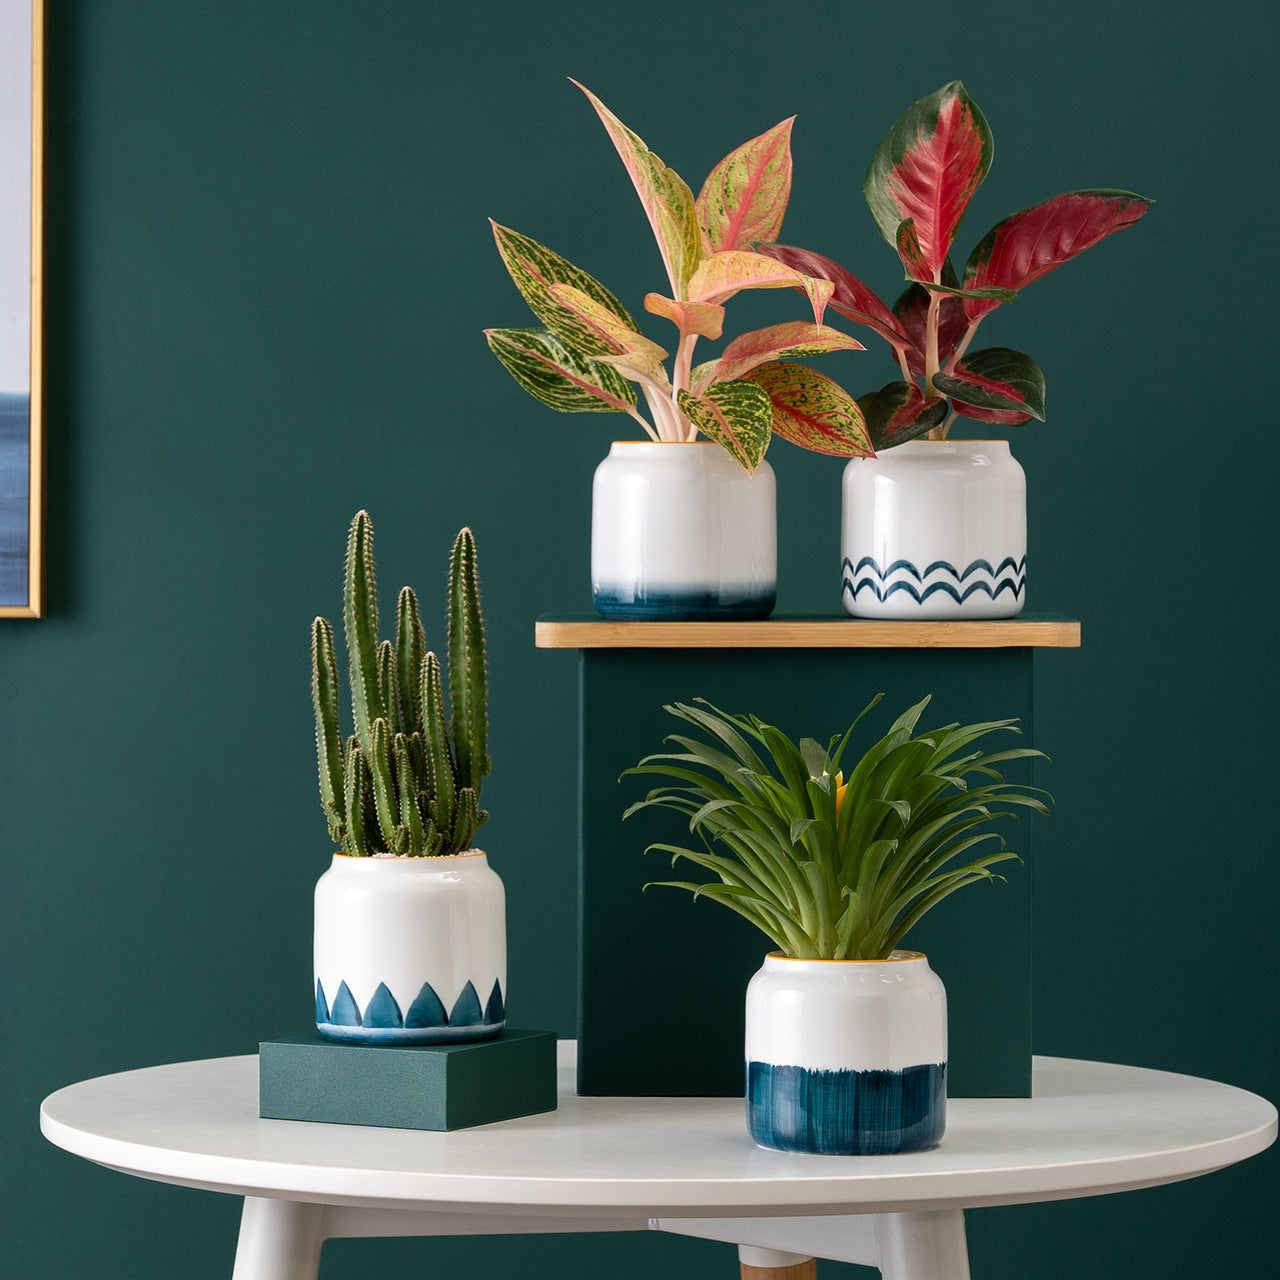 Vasi di ceramica per piante grasse per ambienti interni